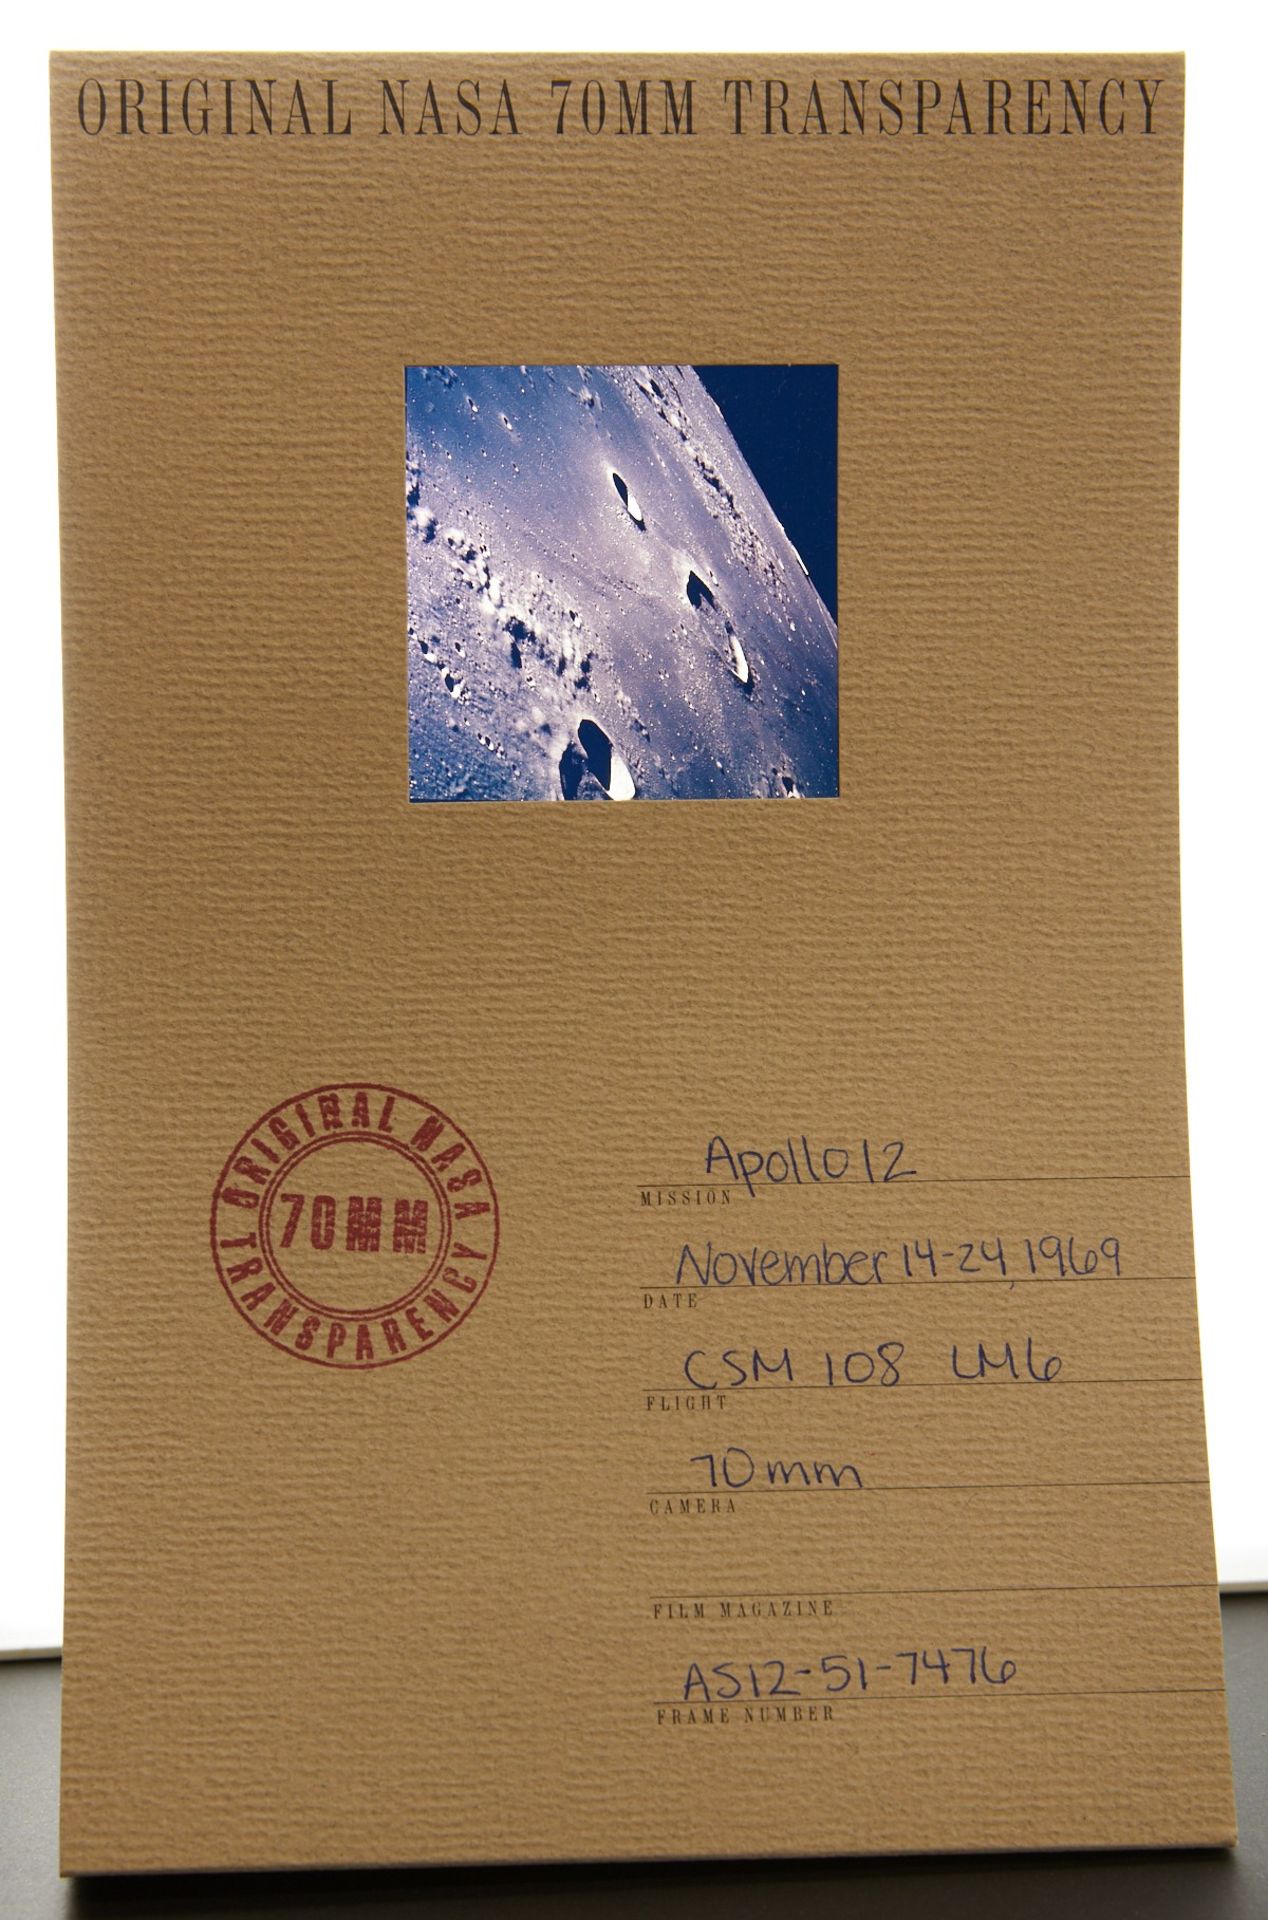 70mm Original NASA Film Transparency Display - Image 2 of 4